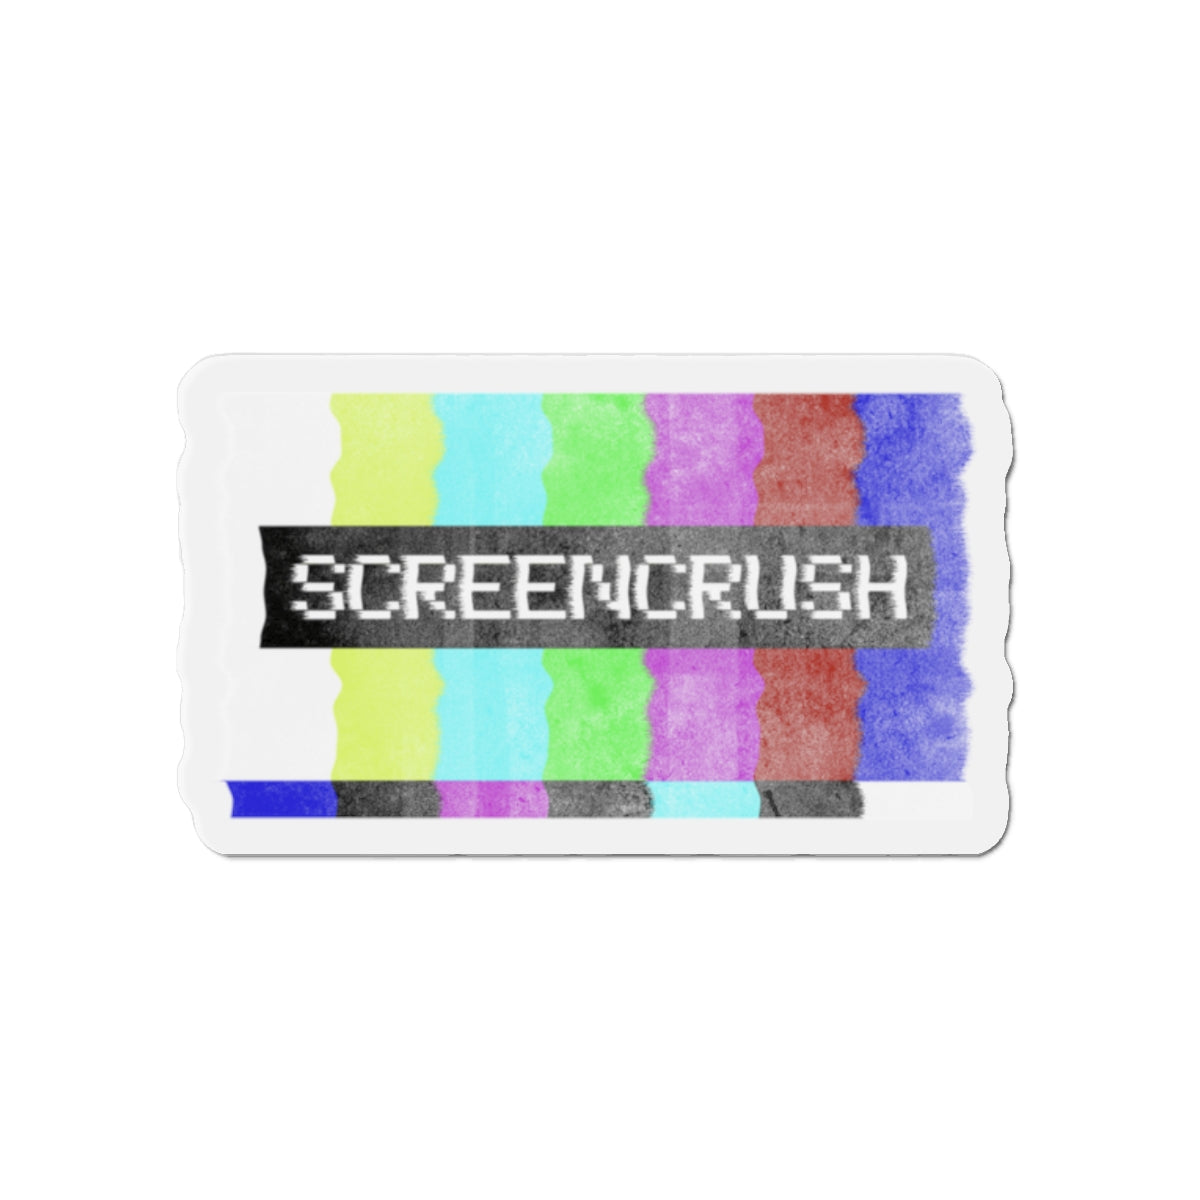 screencrush